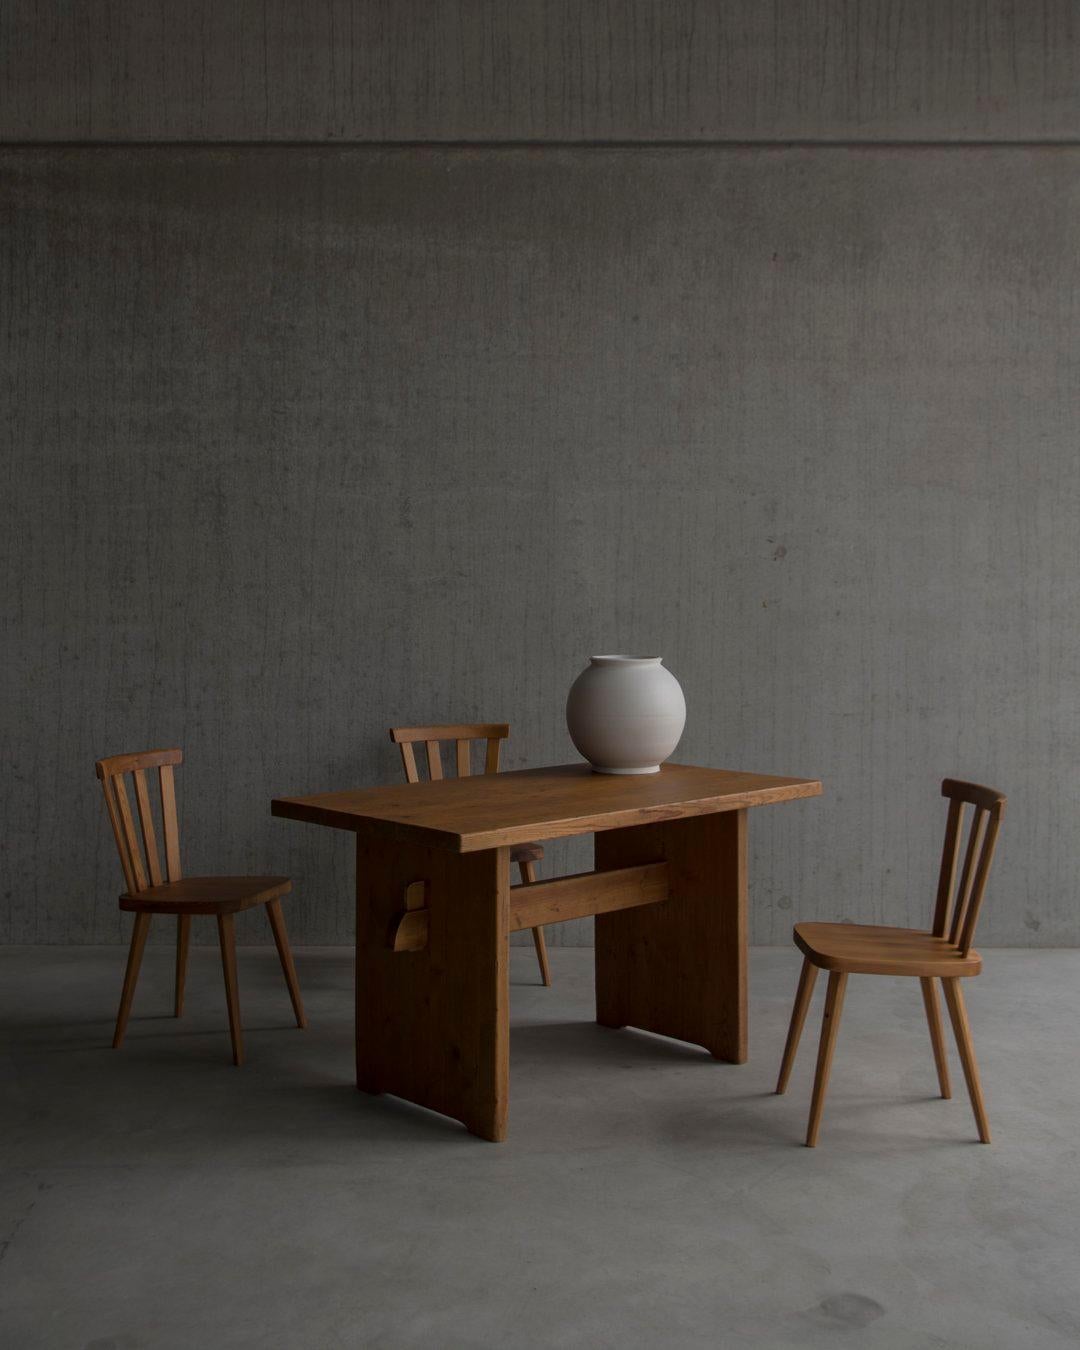 Mid-20th Century Axel Einar Hjorth - Lovö Table, Pine - Nordiska Kompaniet - Mid Century Modern For Sale